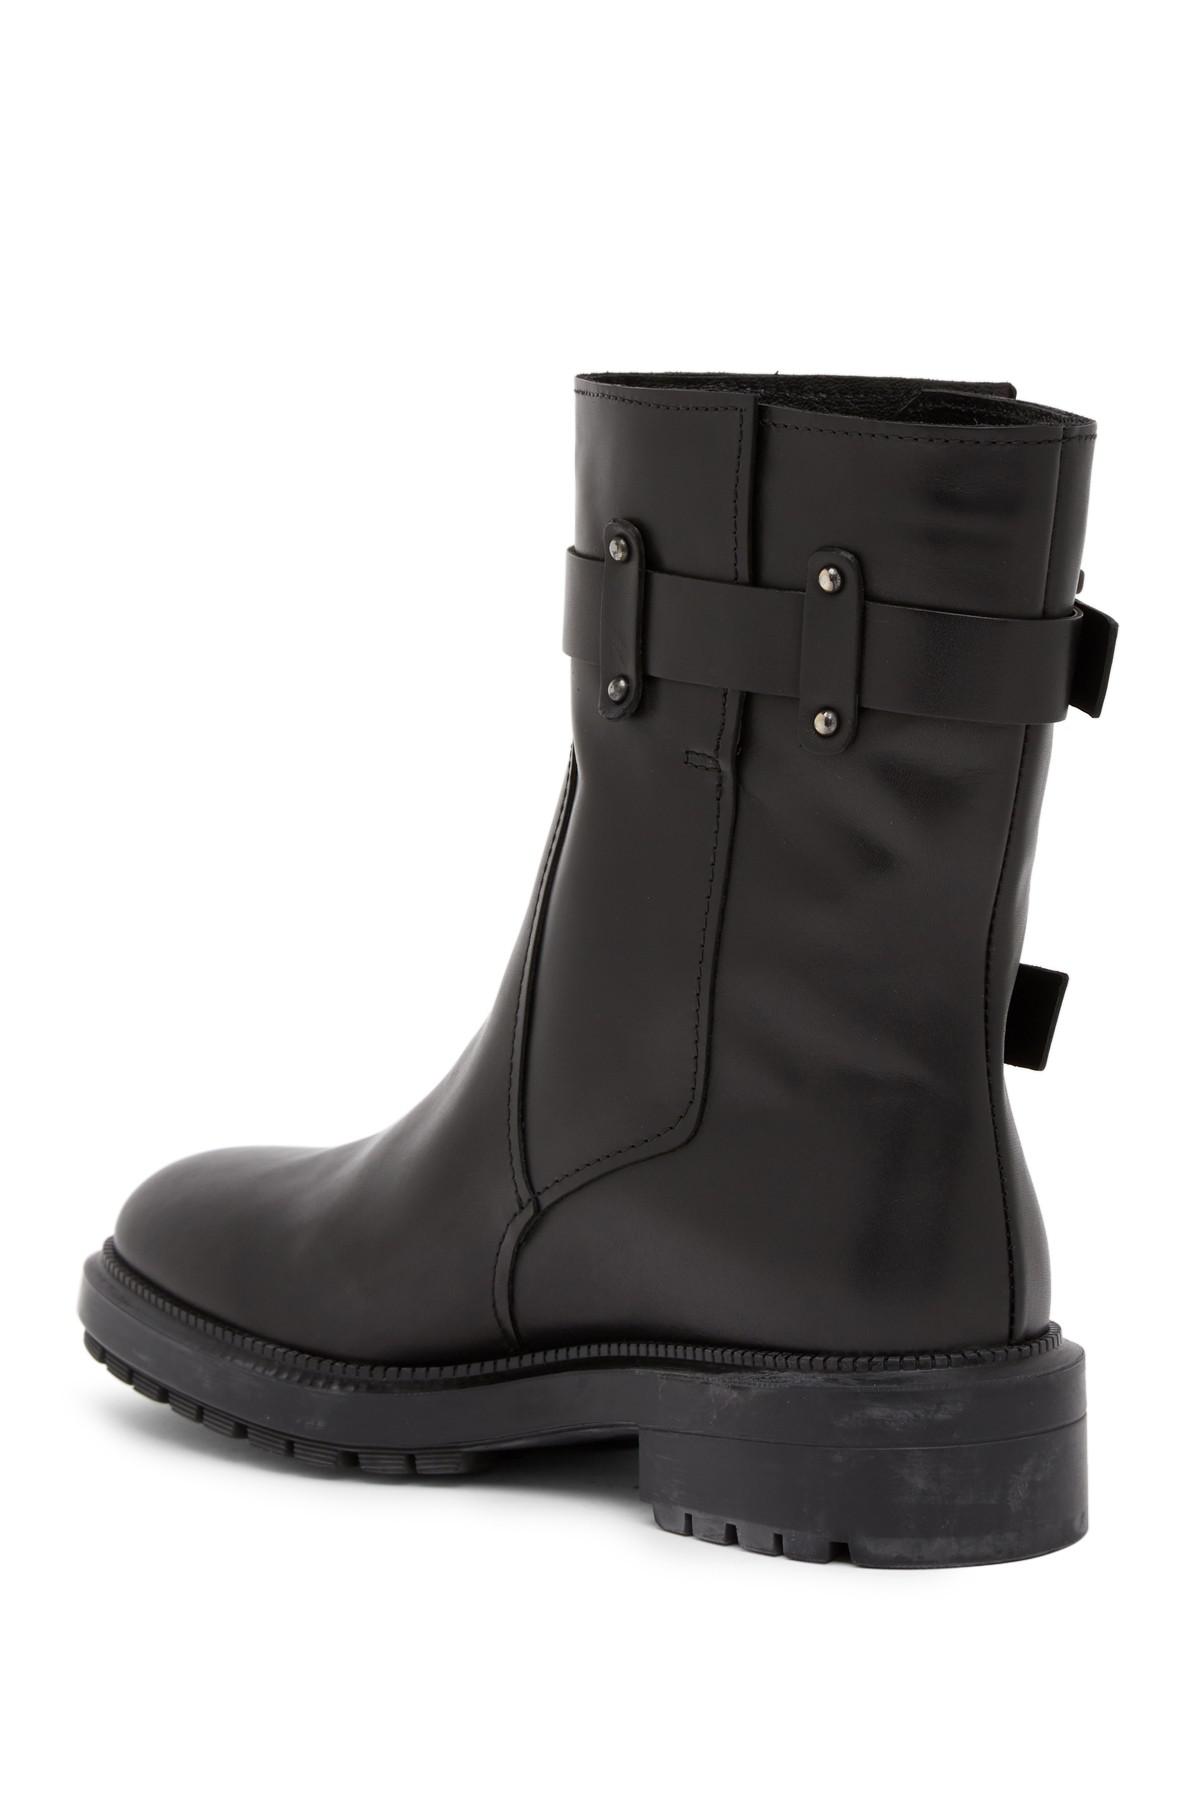 Aquatalia Leonie Weatherproof Leather Boot in Black - Lyst